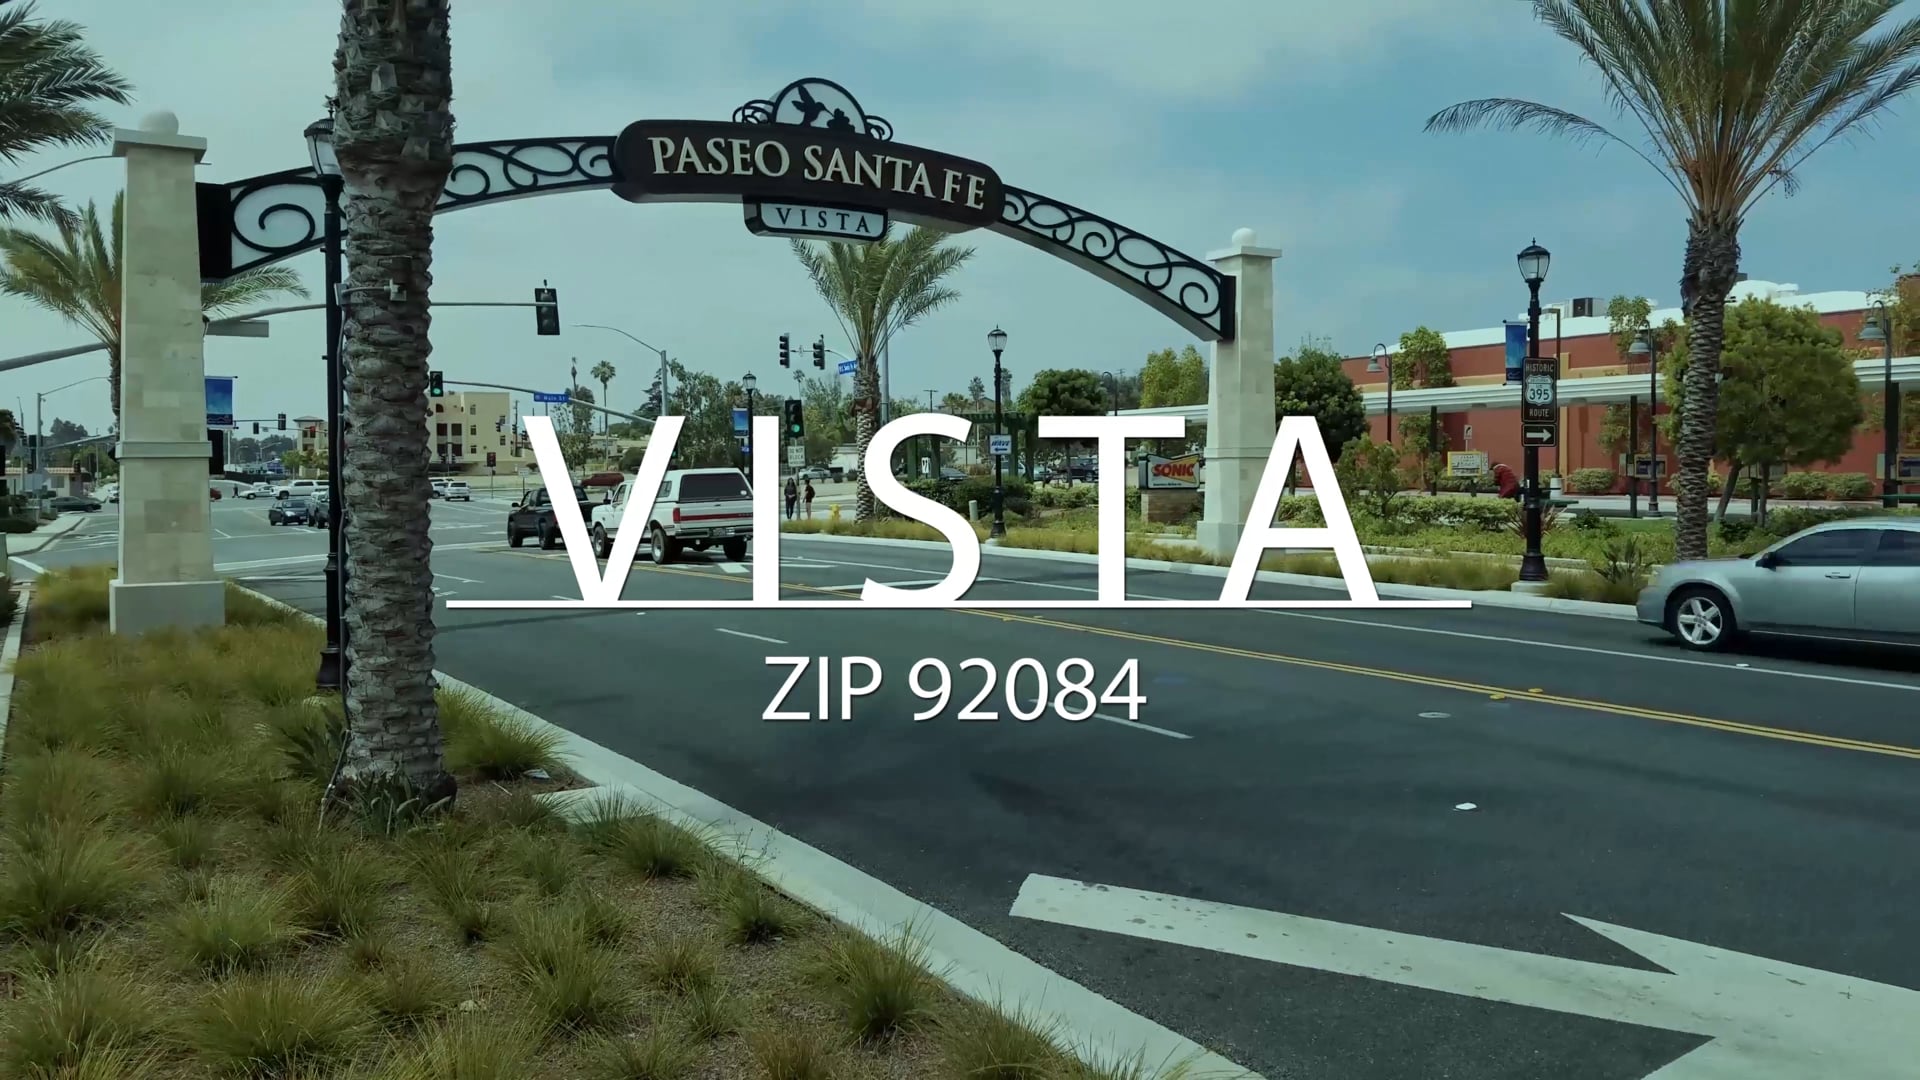 Vista, 92084 -May- Real Estate Market Update